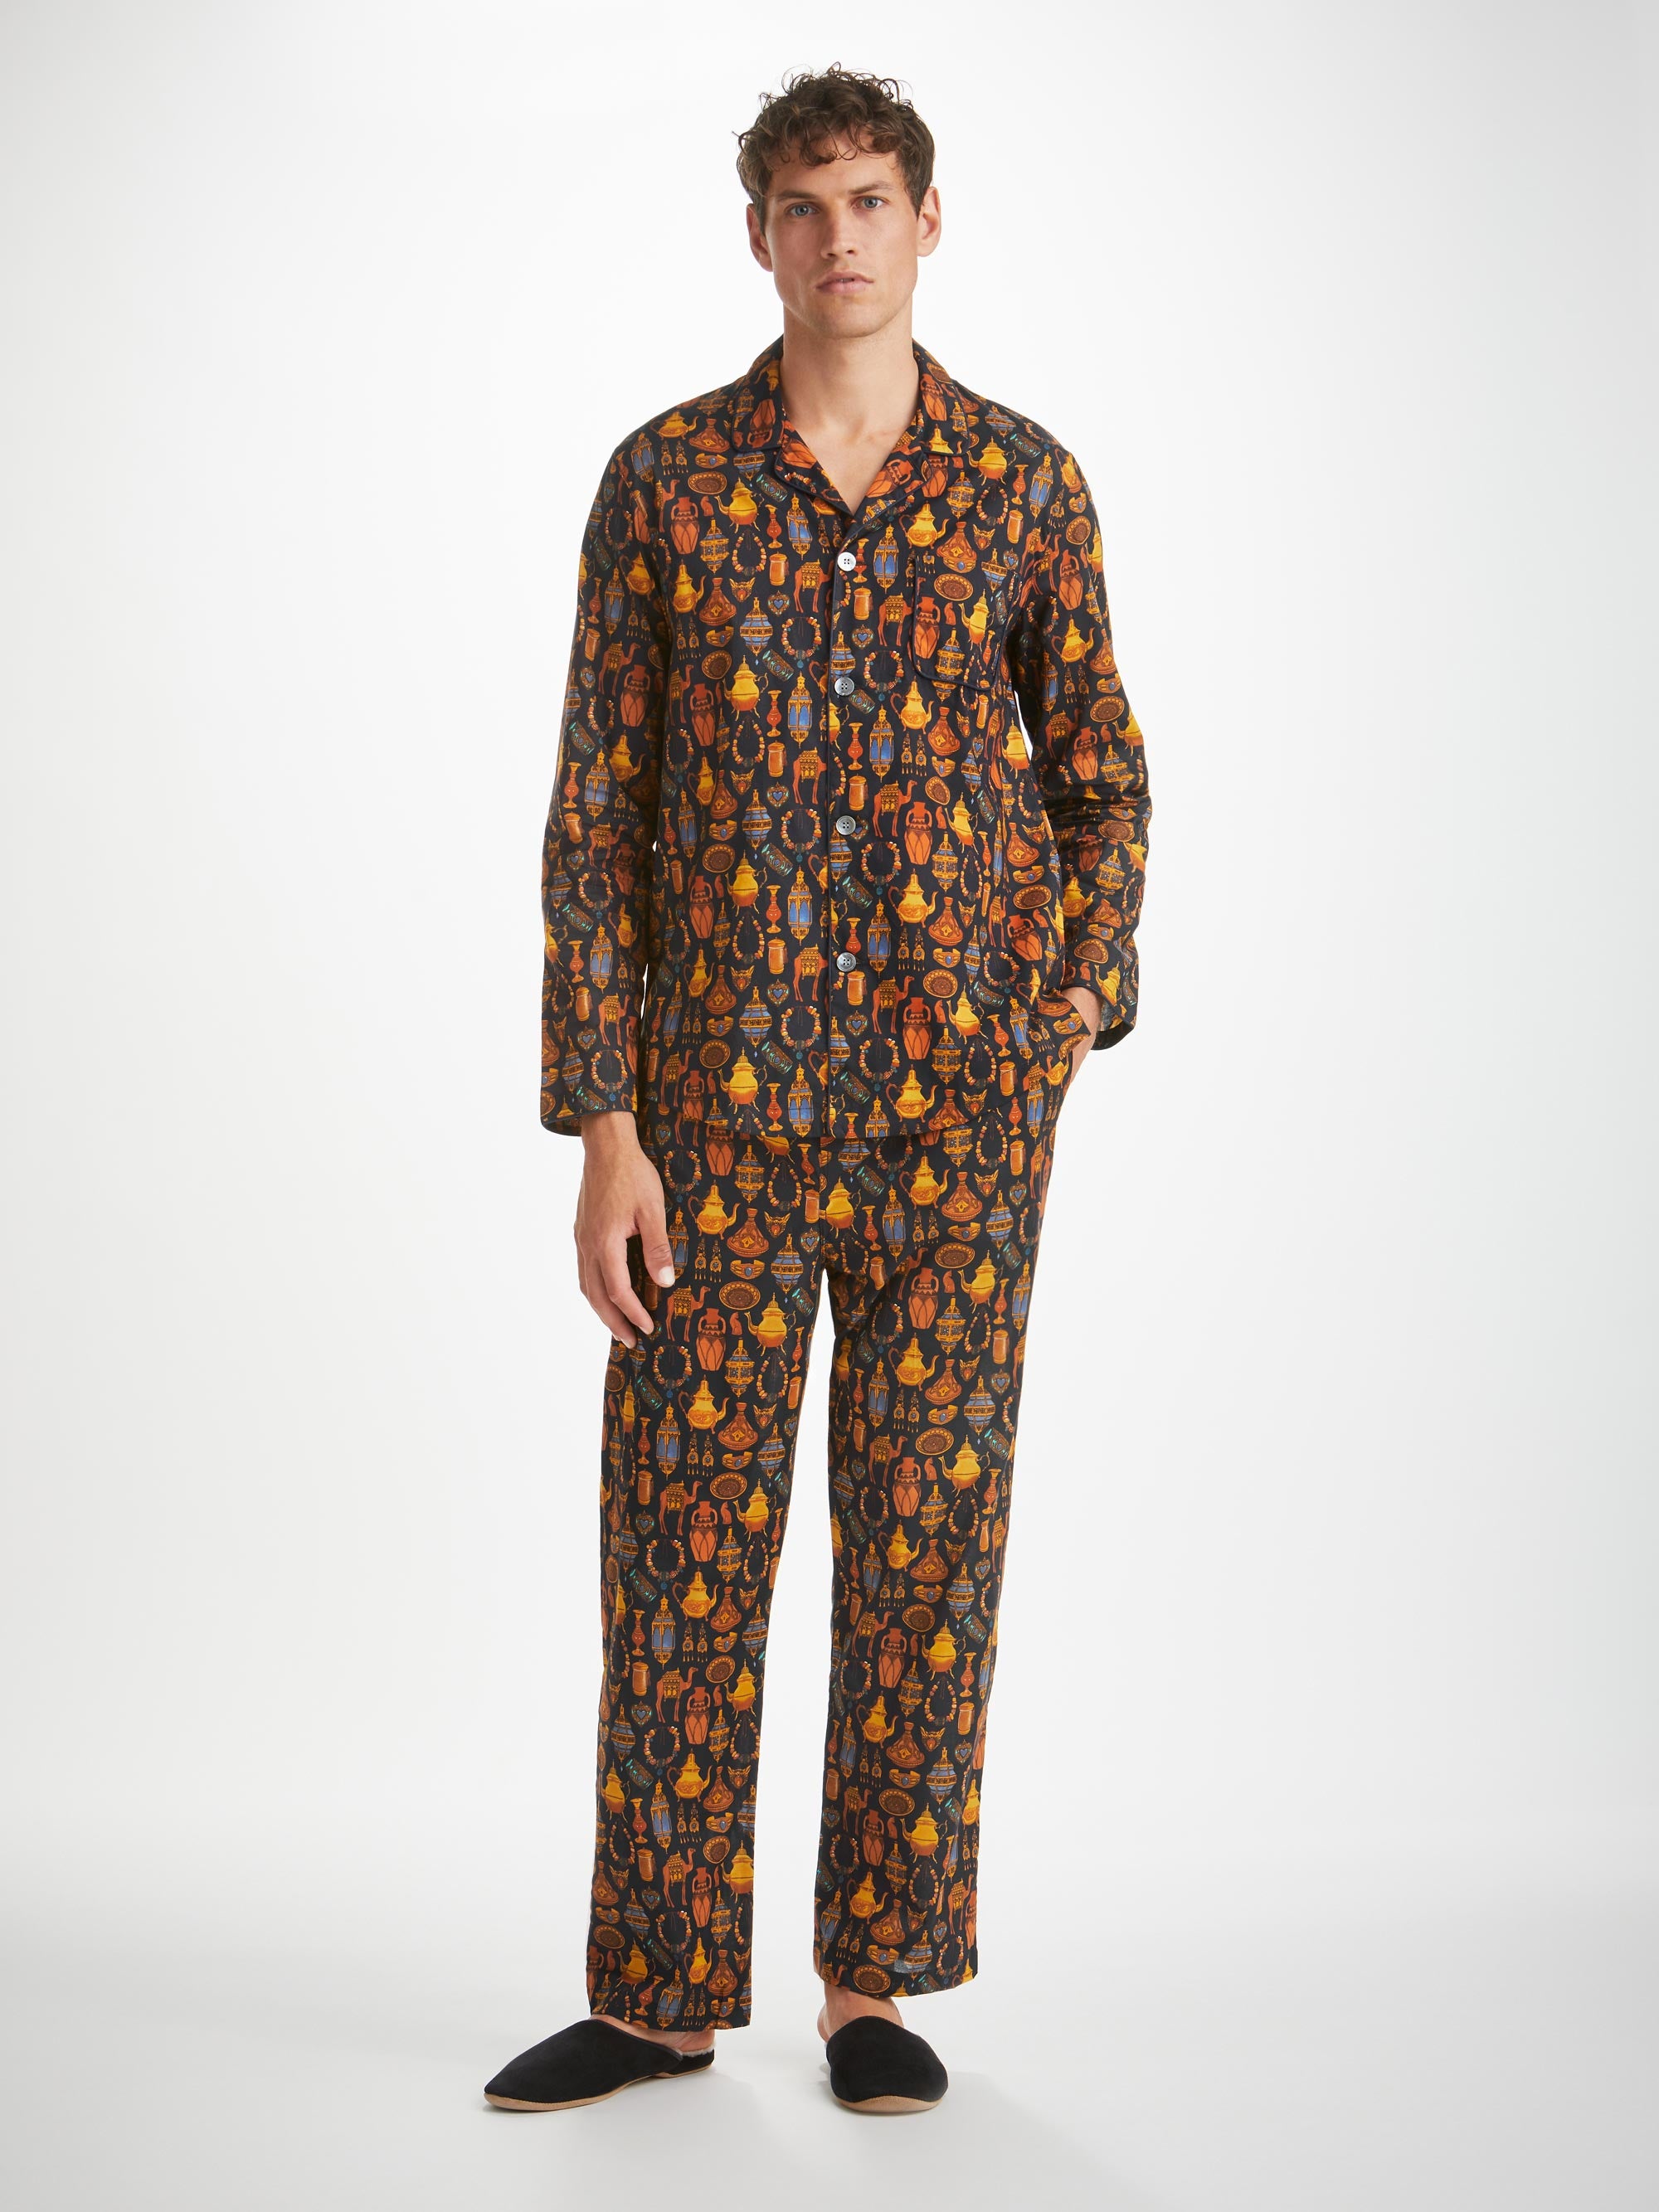 Men's Classic Fit Pyjamas Ledbury 71 Cotton Batiste Navy